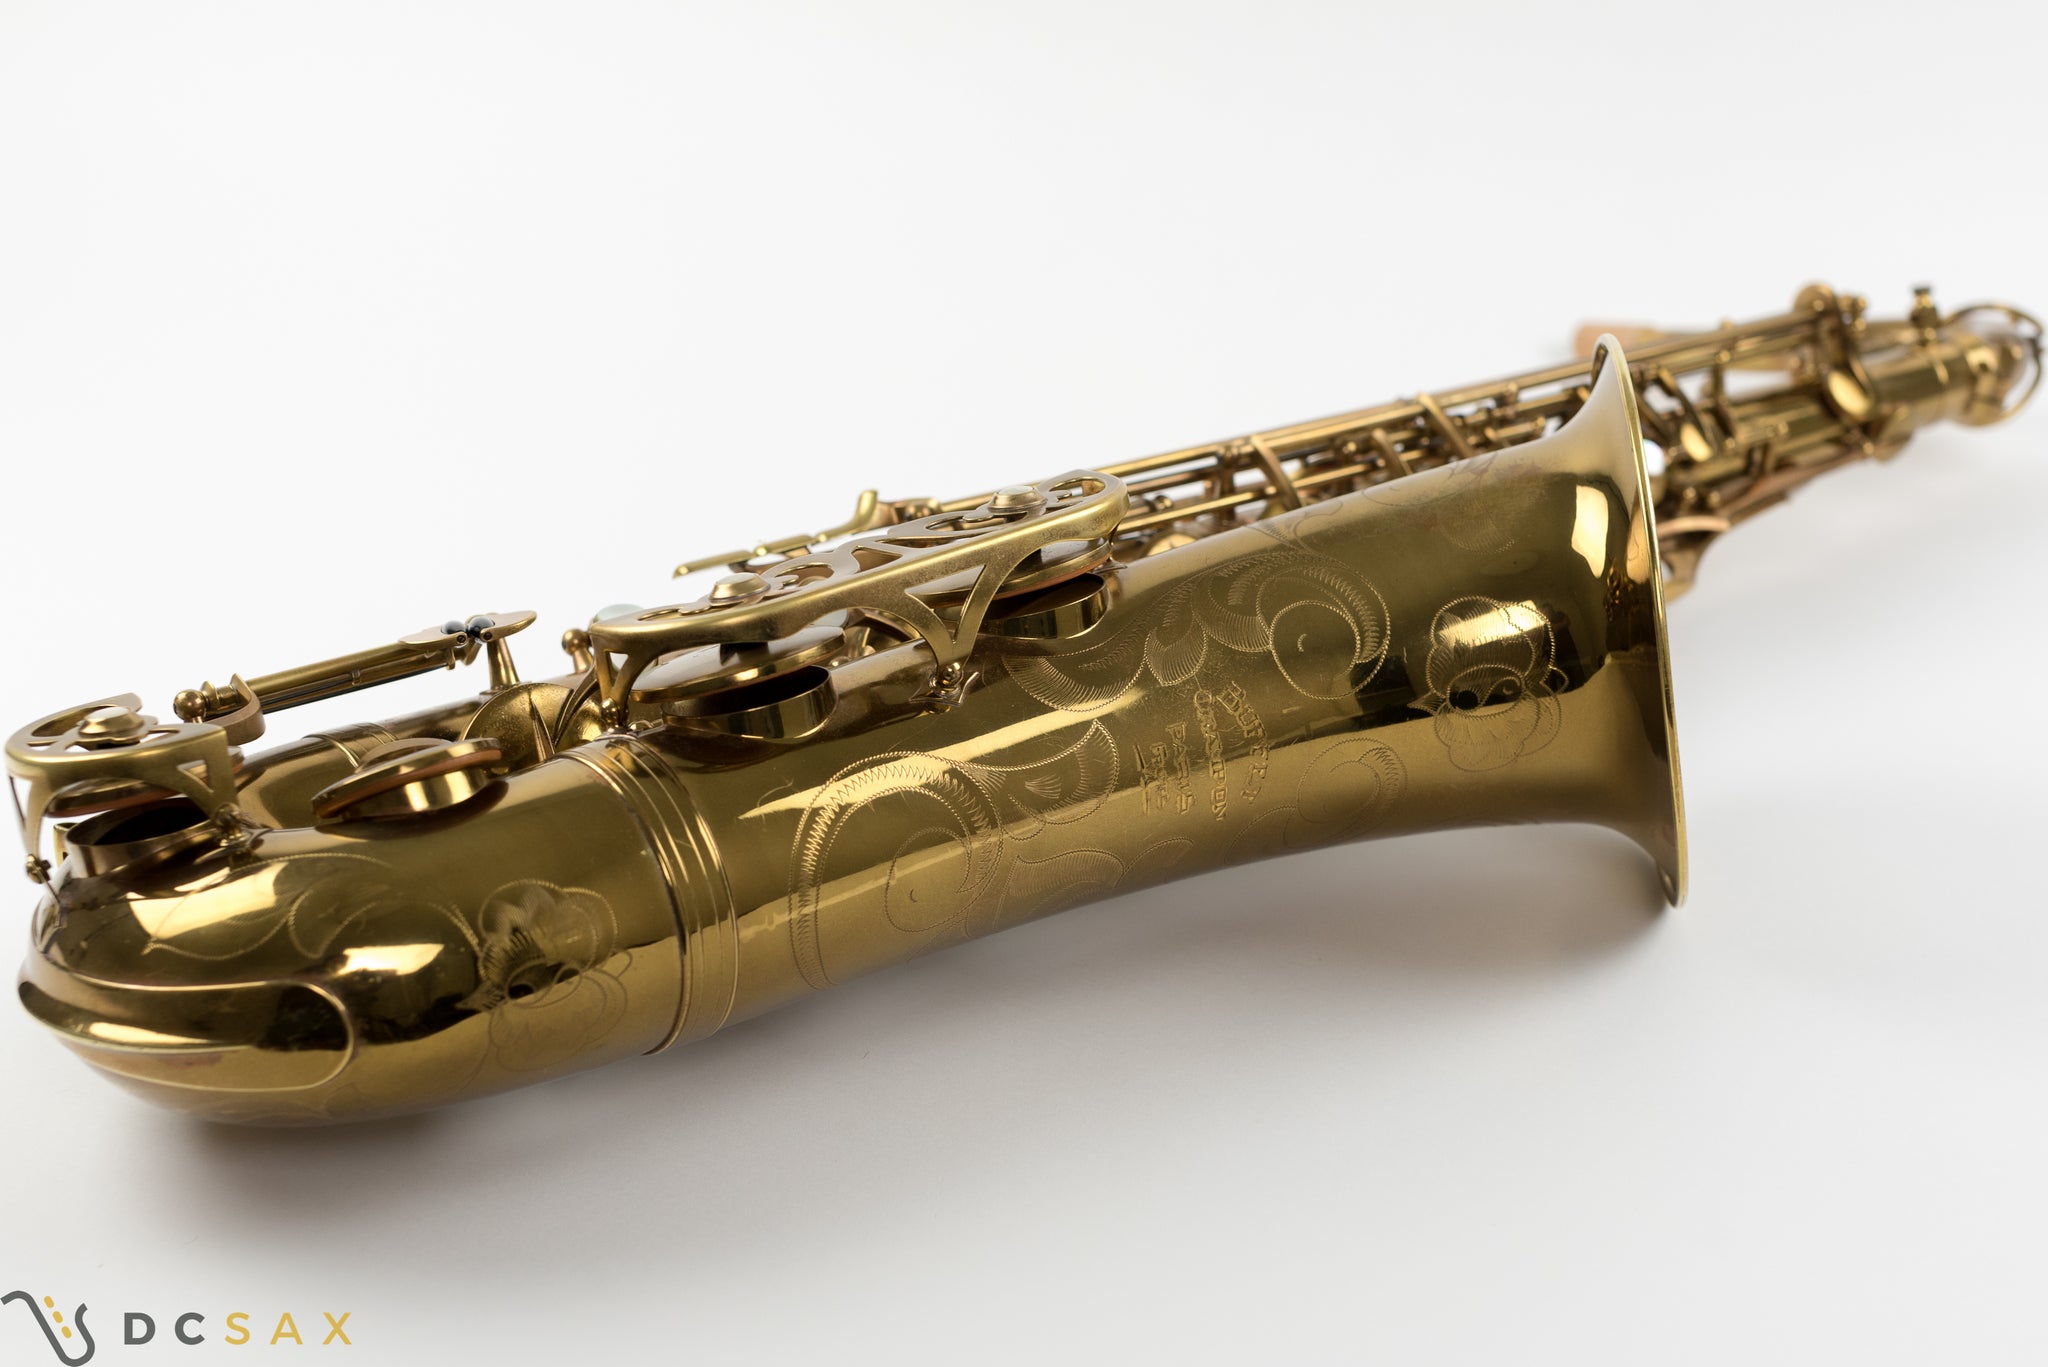 1958 Buffet Crampon Super Dynaction Tenor Saxophone, Fresh Overhaul, Video